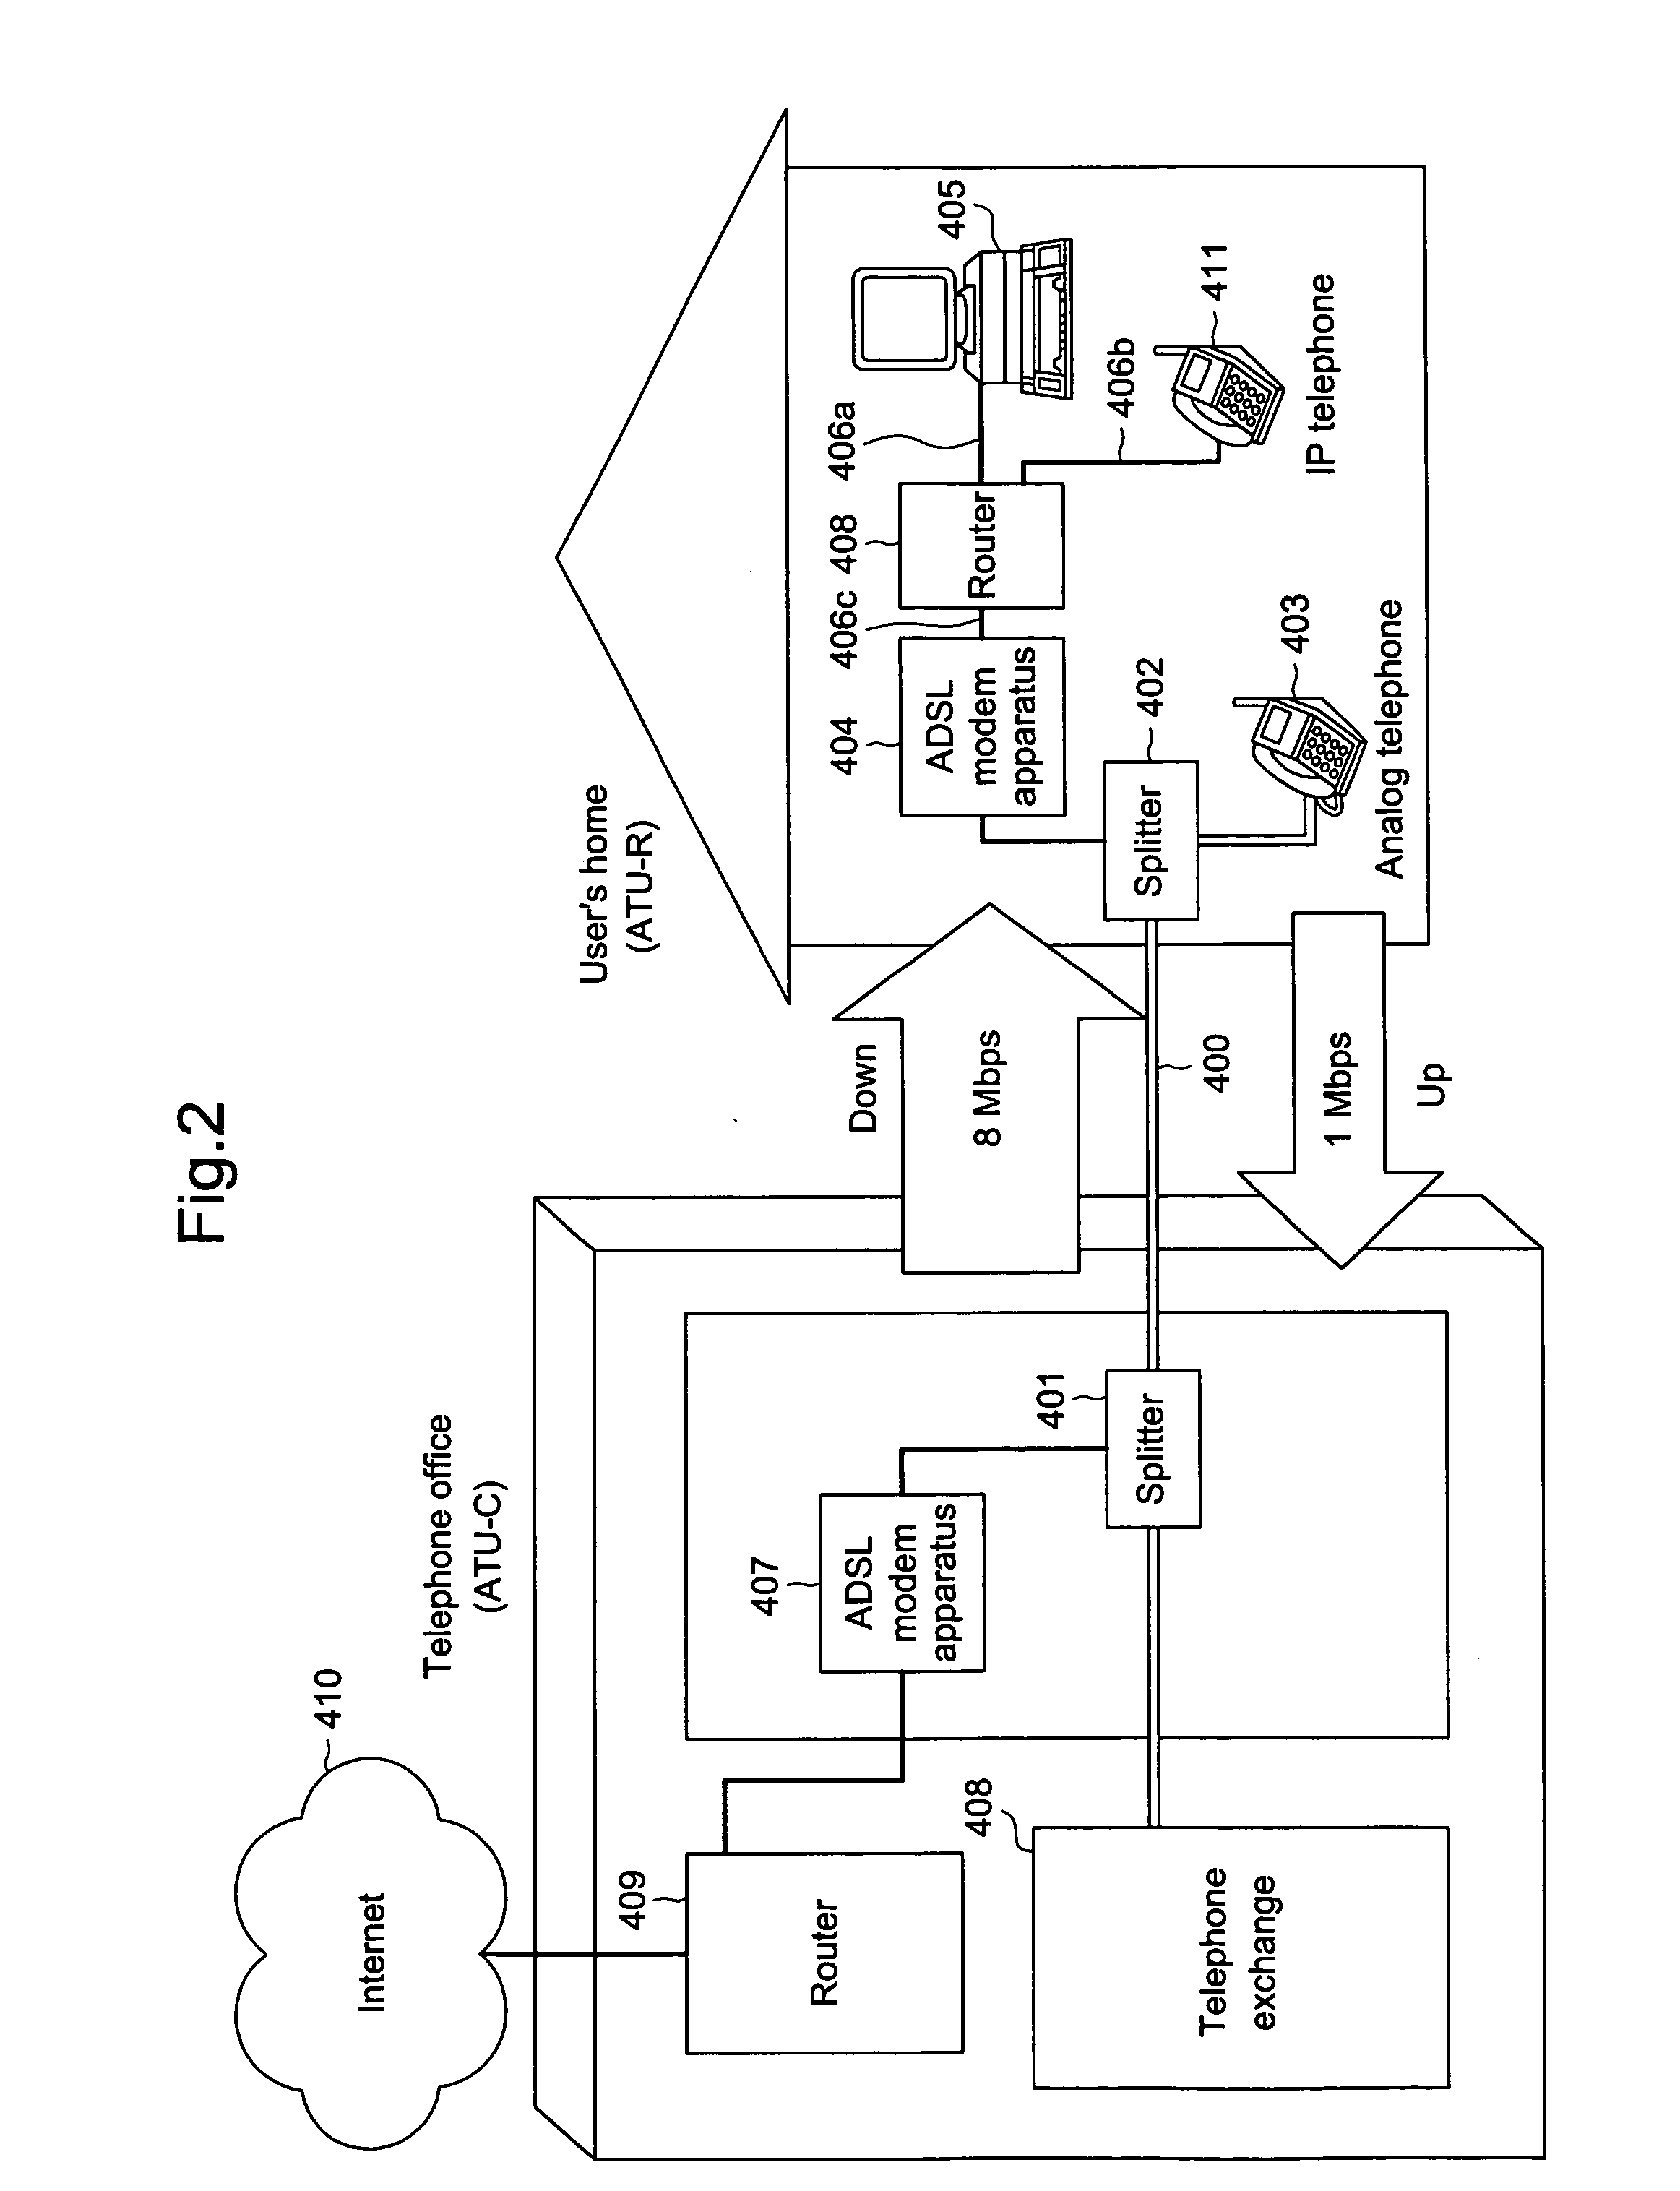 DSL modem apparatus and control method for DSL modem apparatus